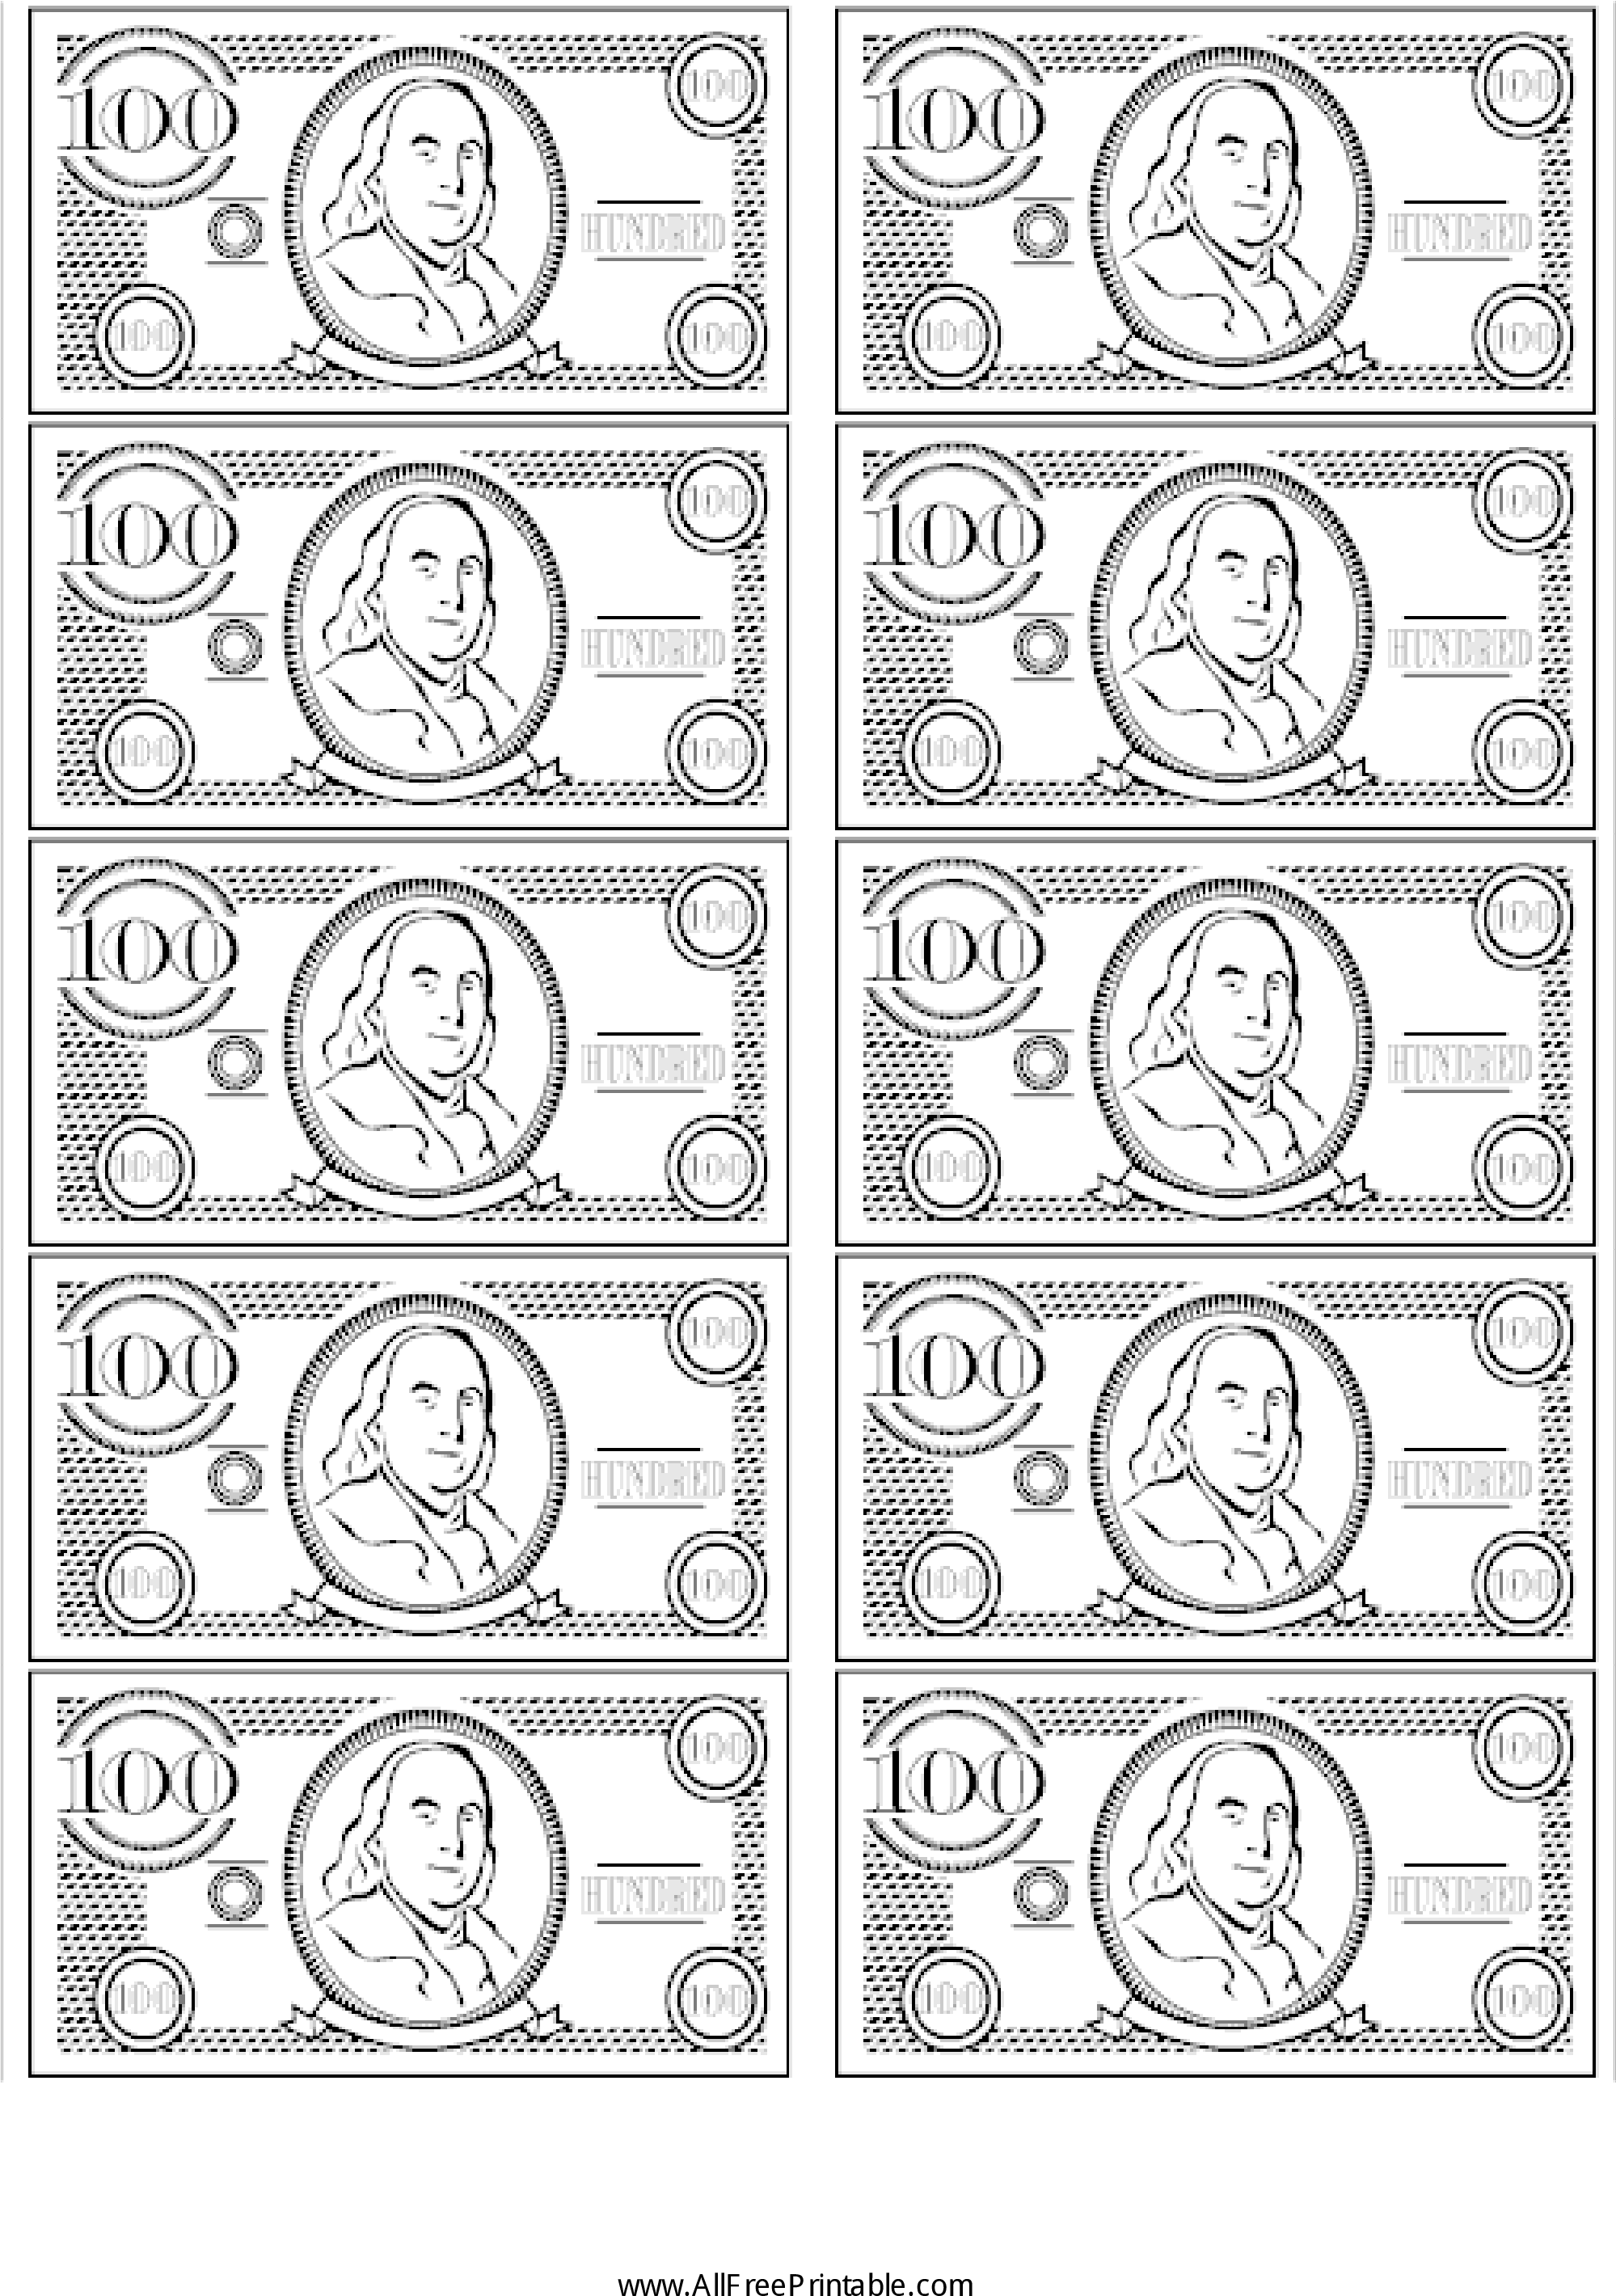 Download 100 Bill Fake Money Main Image Printable Play Money Black